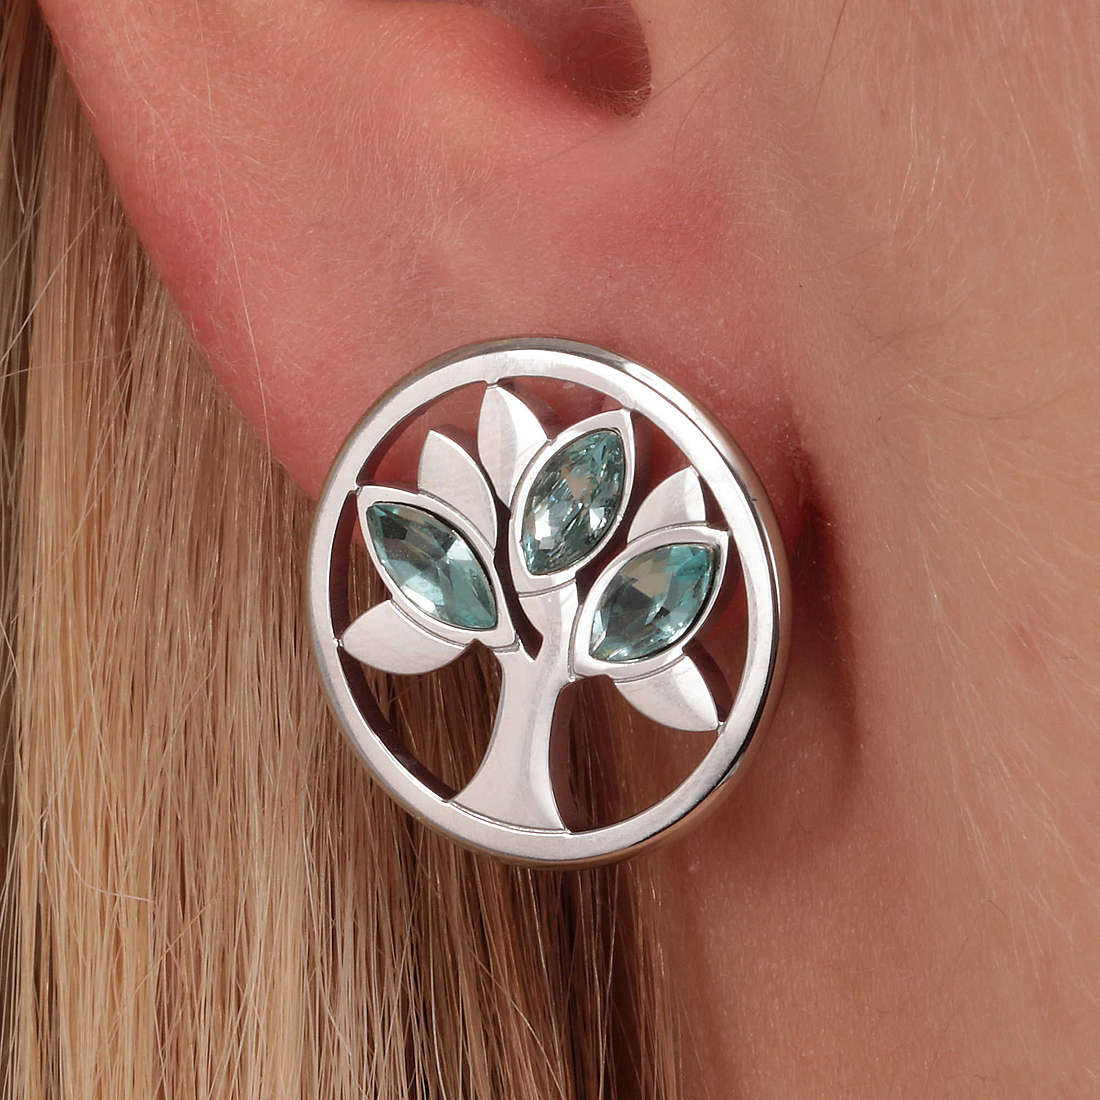 Morellato earrings Vita woman SATD22 wearing